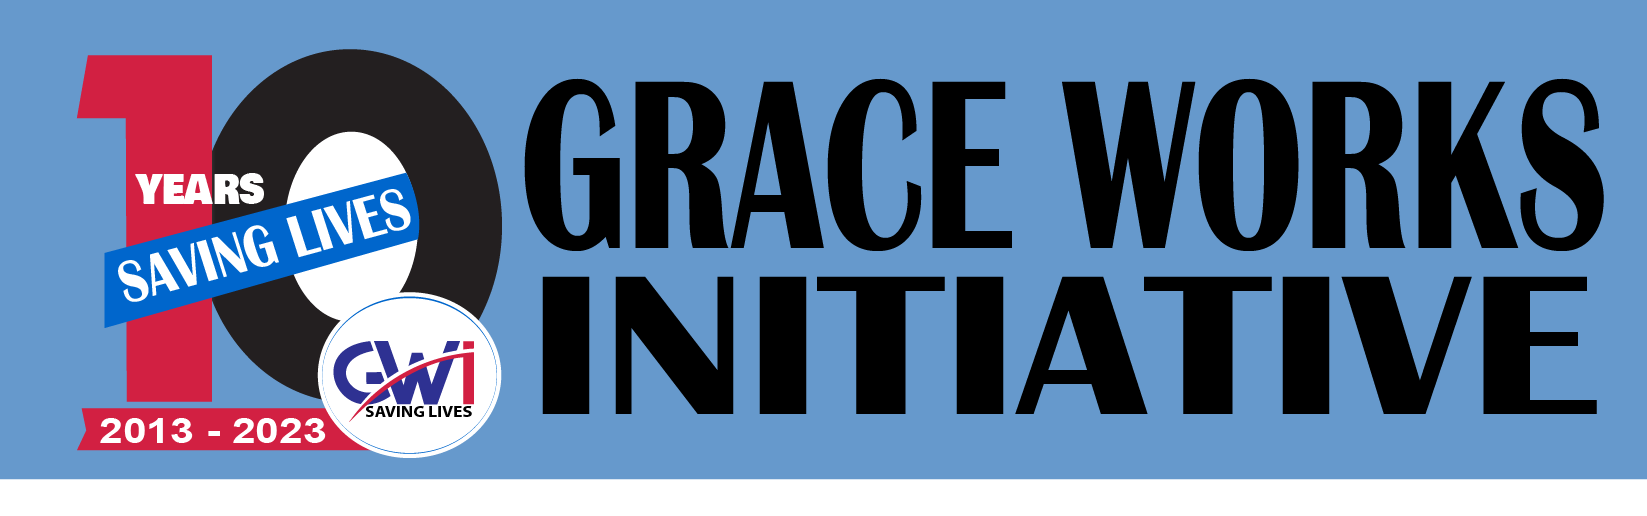 Grace Works Initiative